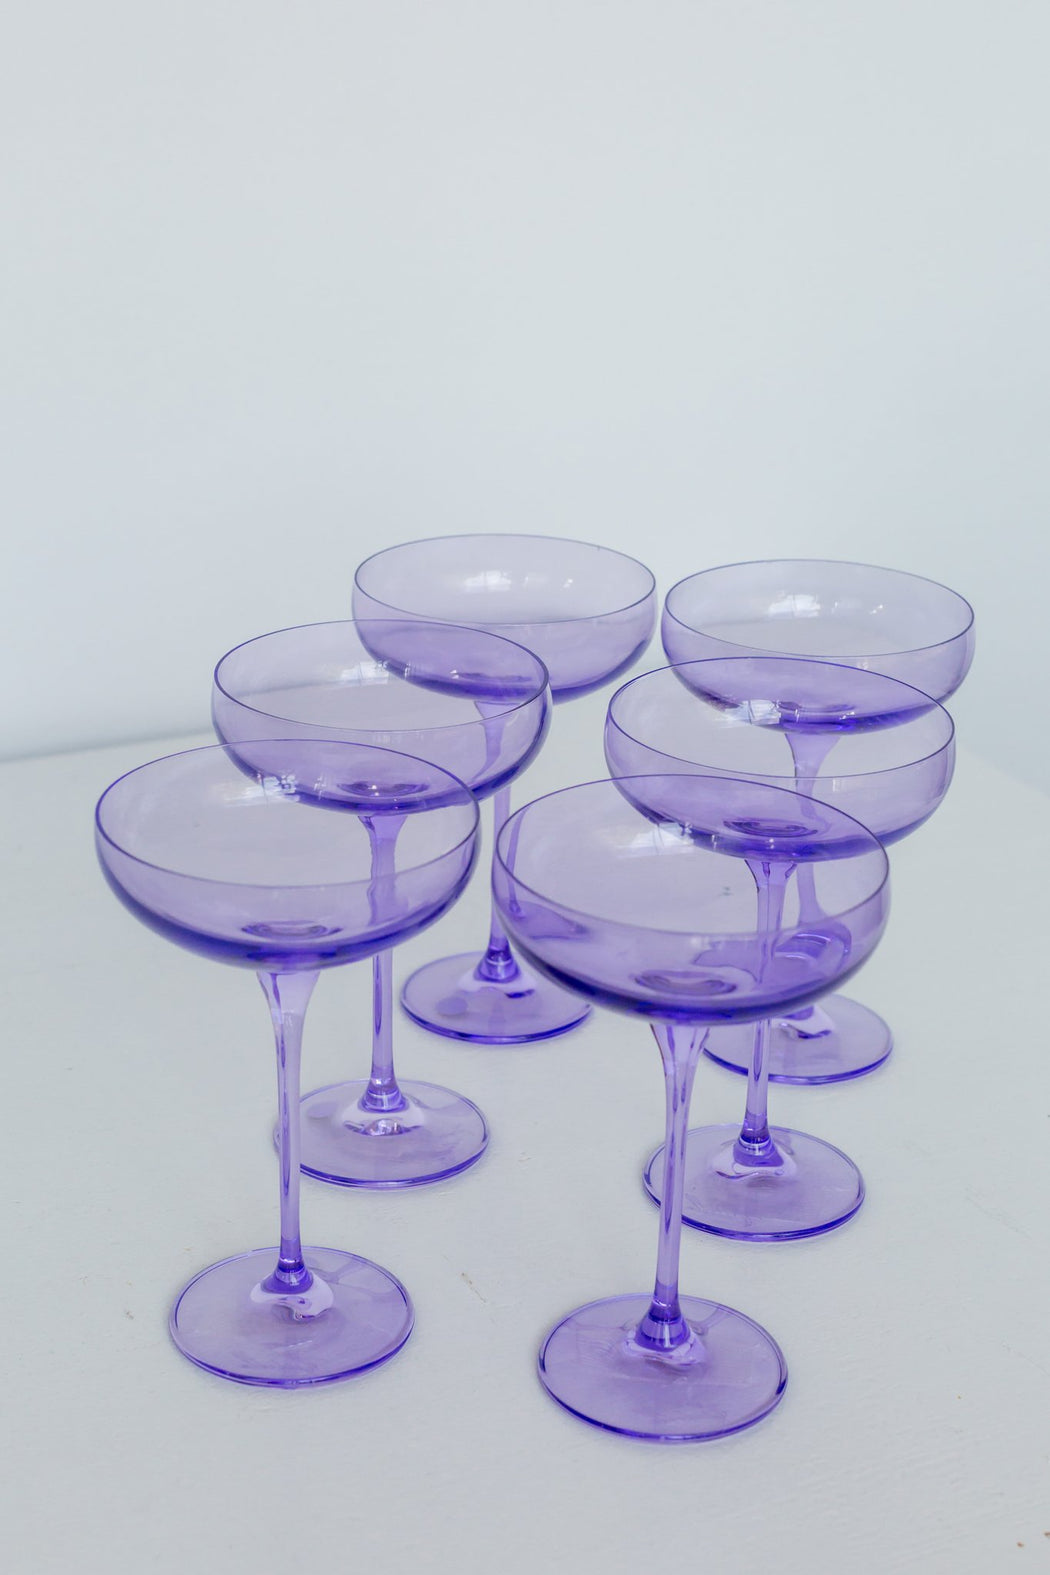 Coupe Glasses in Lavender